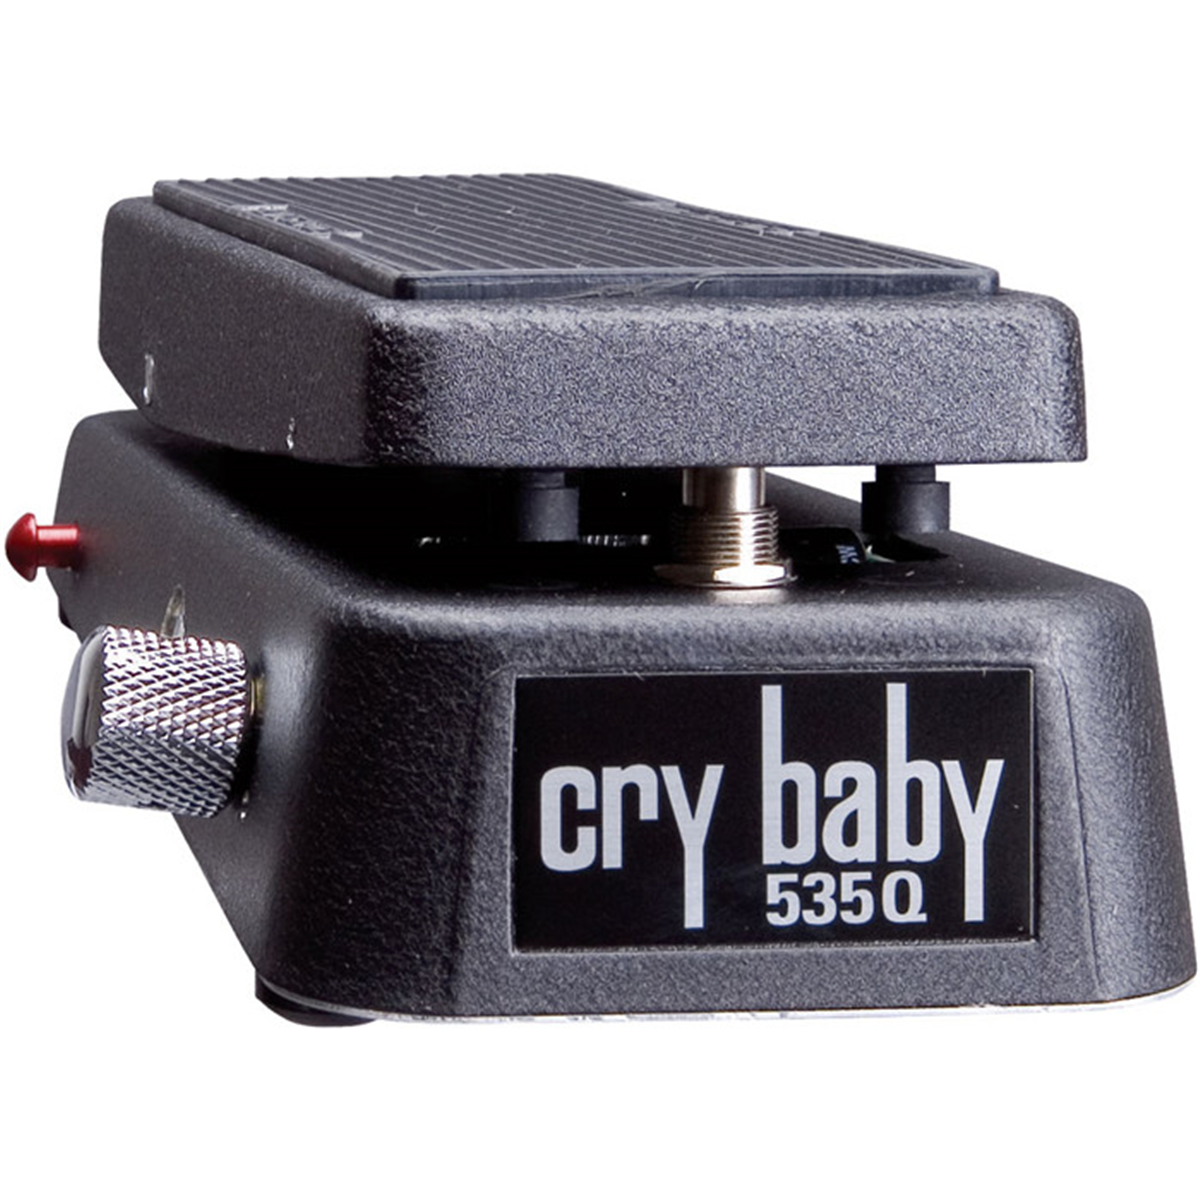 DUNLOP Crybaby CB-535Q Avec Boost